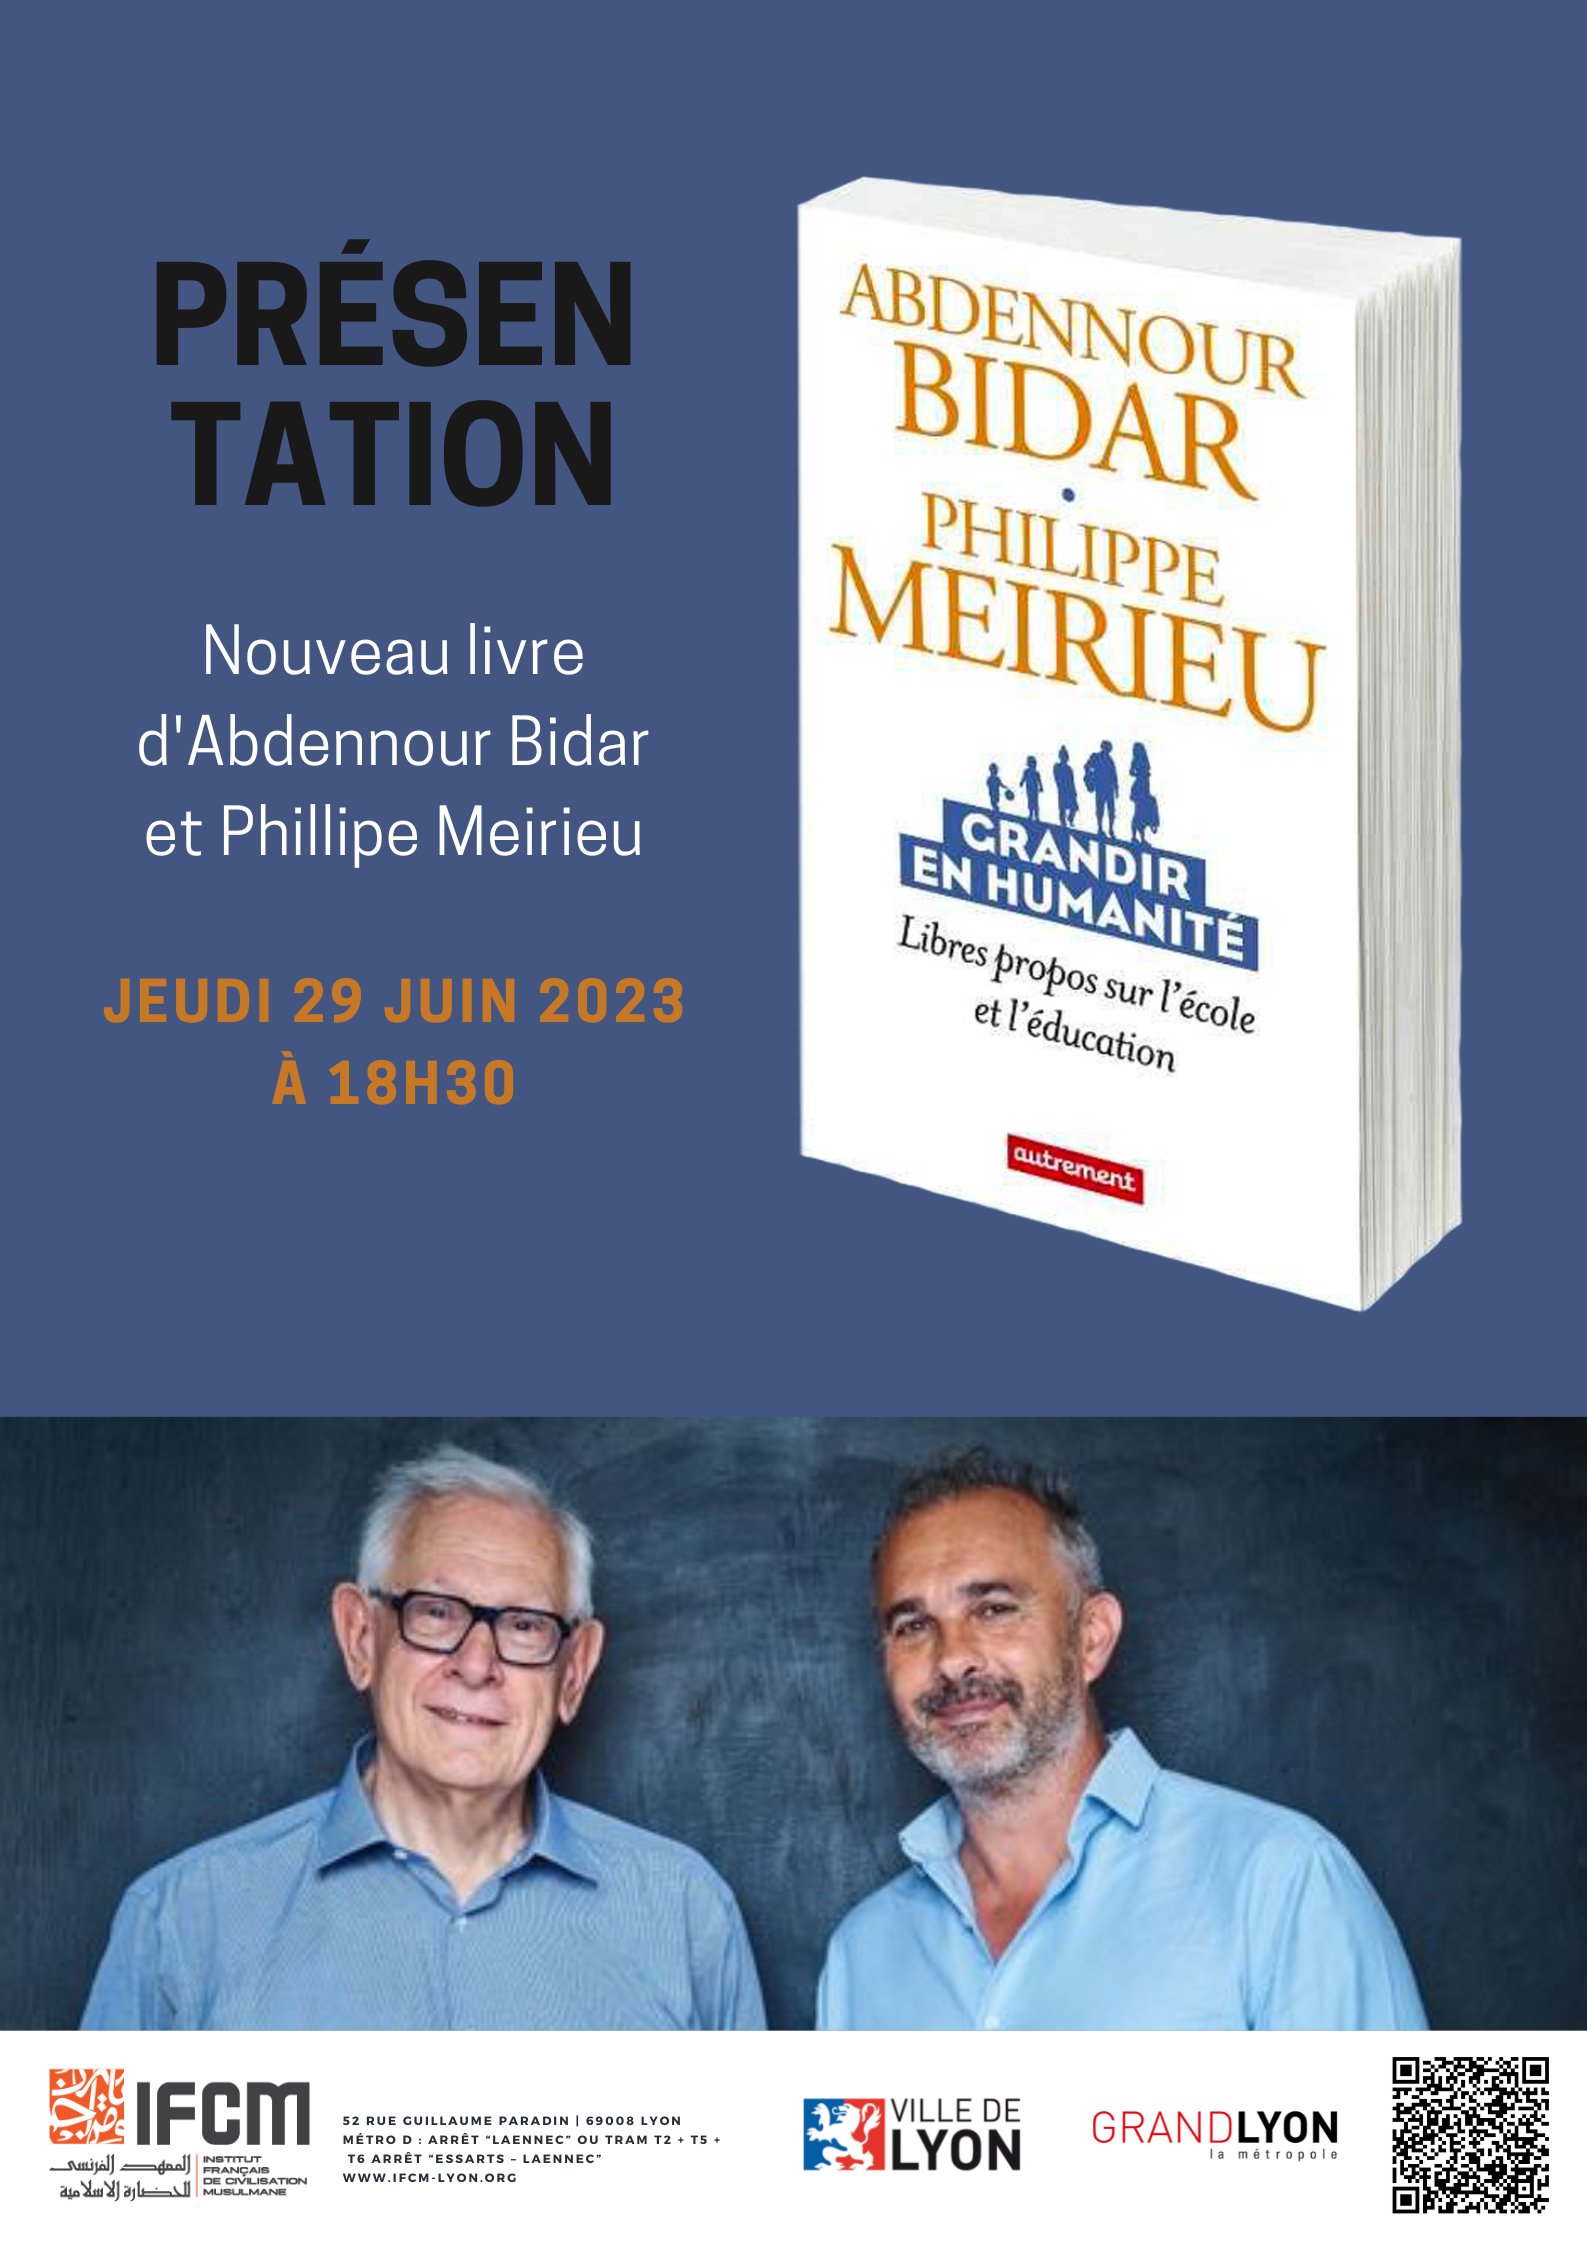 https://www.saphirnews.com/agenda/Presentation-du-livre-Grandir-en-humanite-d-Abdennour-Bidar-et-Philippe-Meirieu_ae732825.html